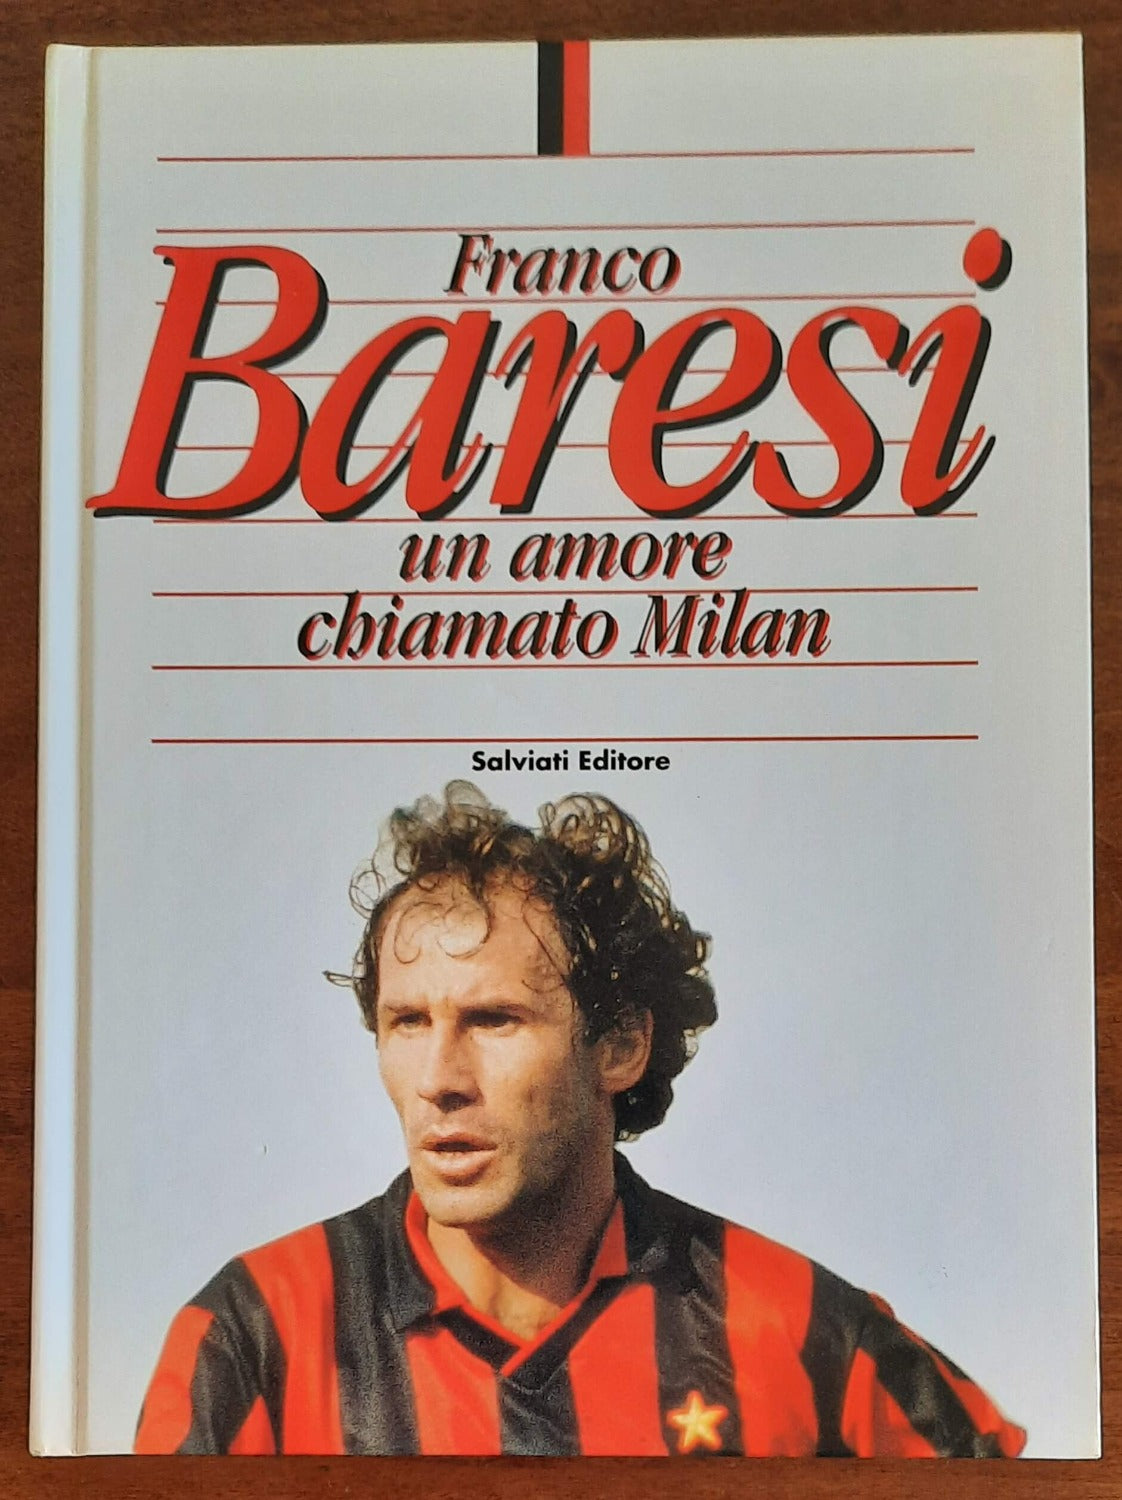 Franco Baresi un amore chiamato Milan